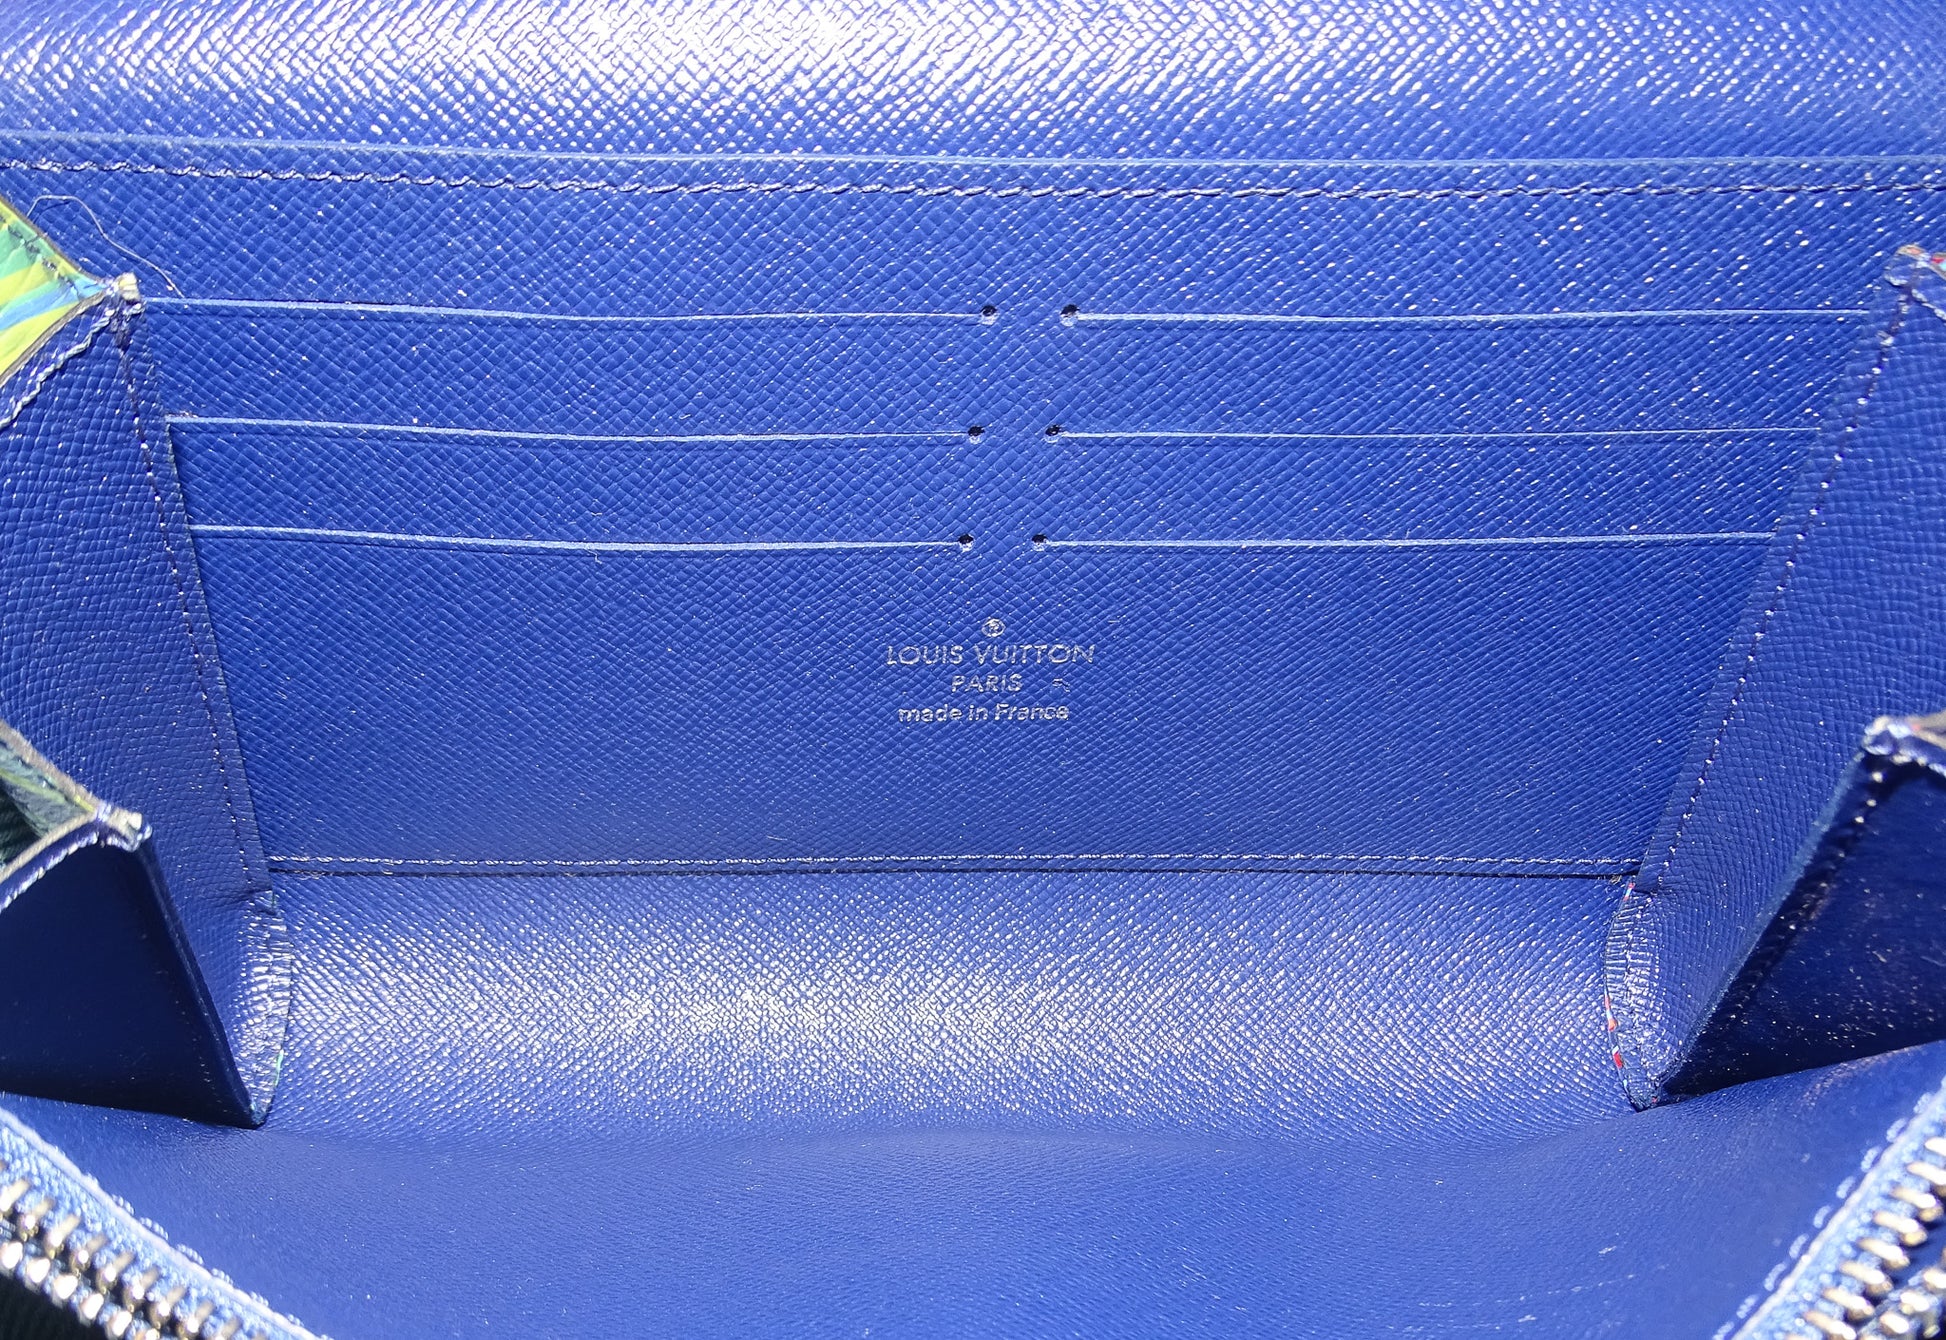 Designer Exchange Ltd - ❤ A Louis Vuitton Wallet with a twist